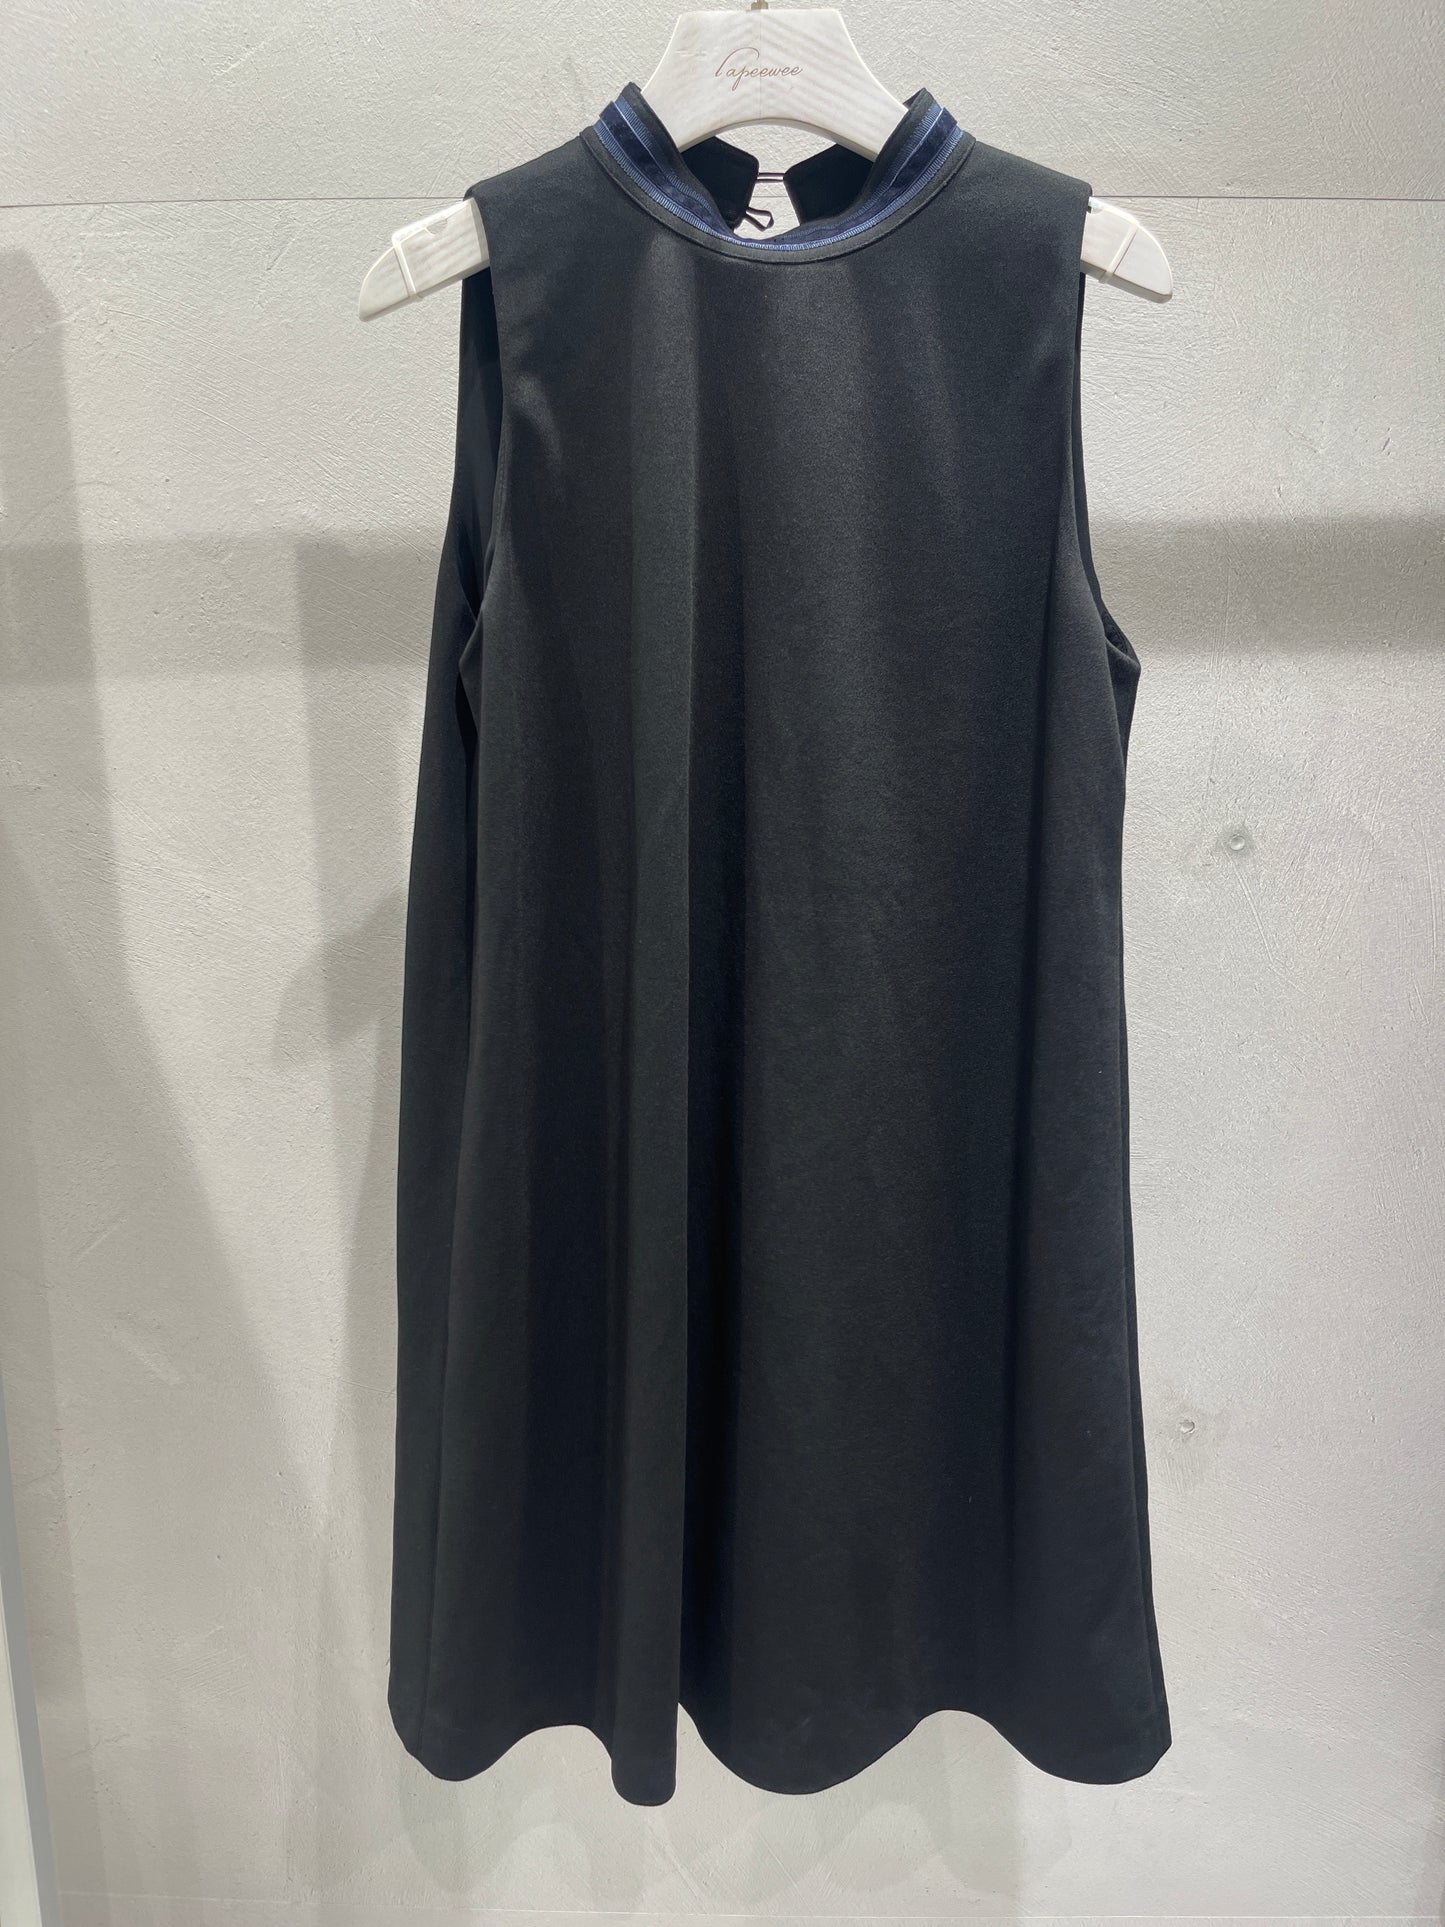 Black A-line Dress-Free Size